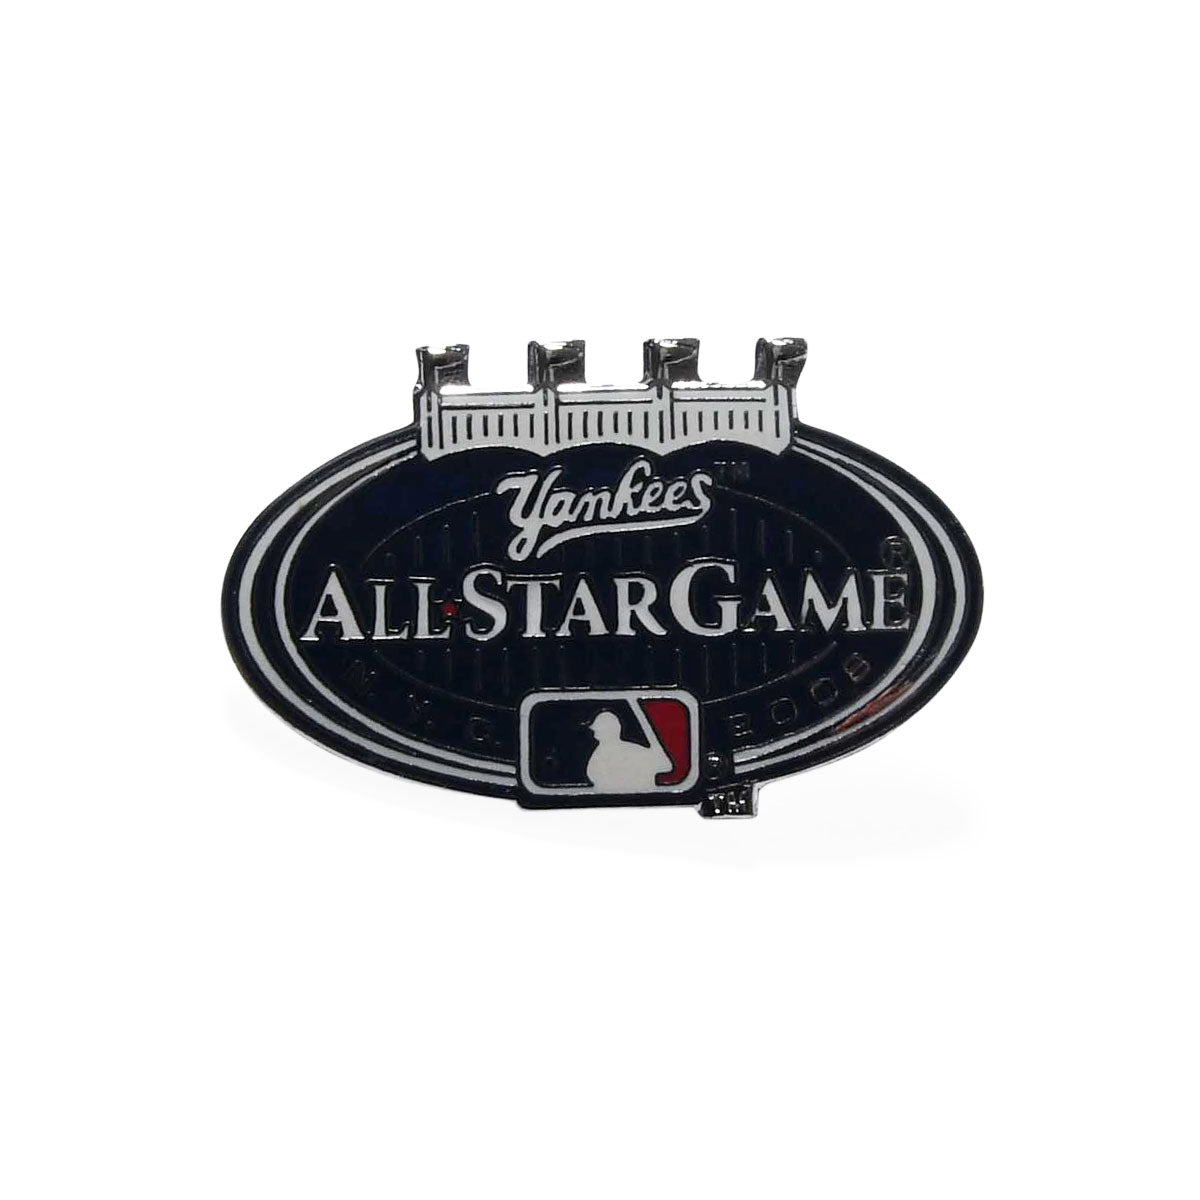 MLB-2306 2008 MLB All-Star Game Logo Pin - Yankee Stadium